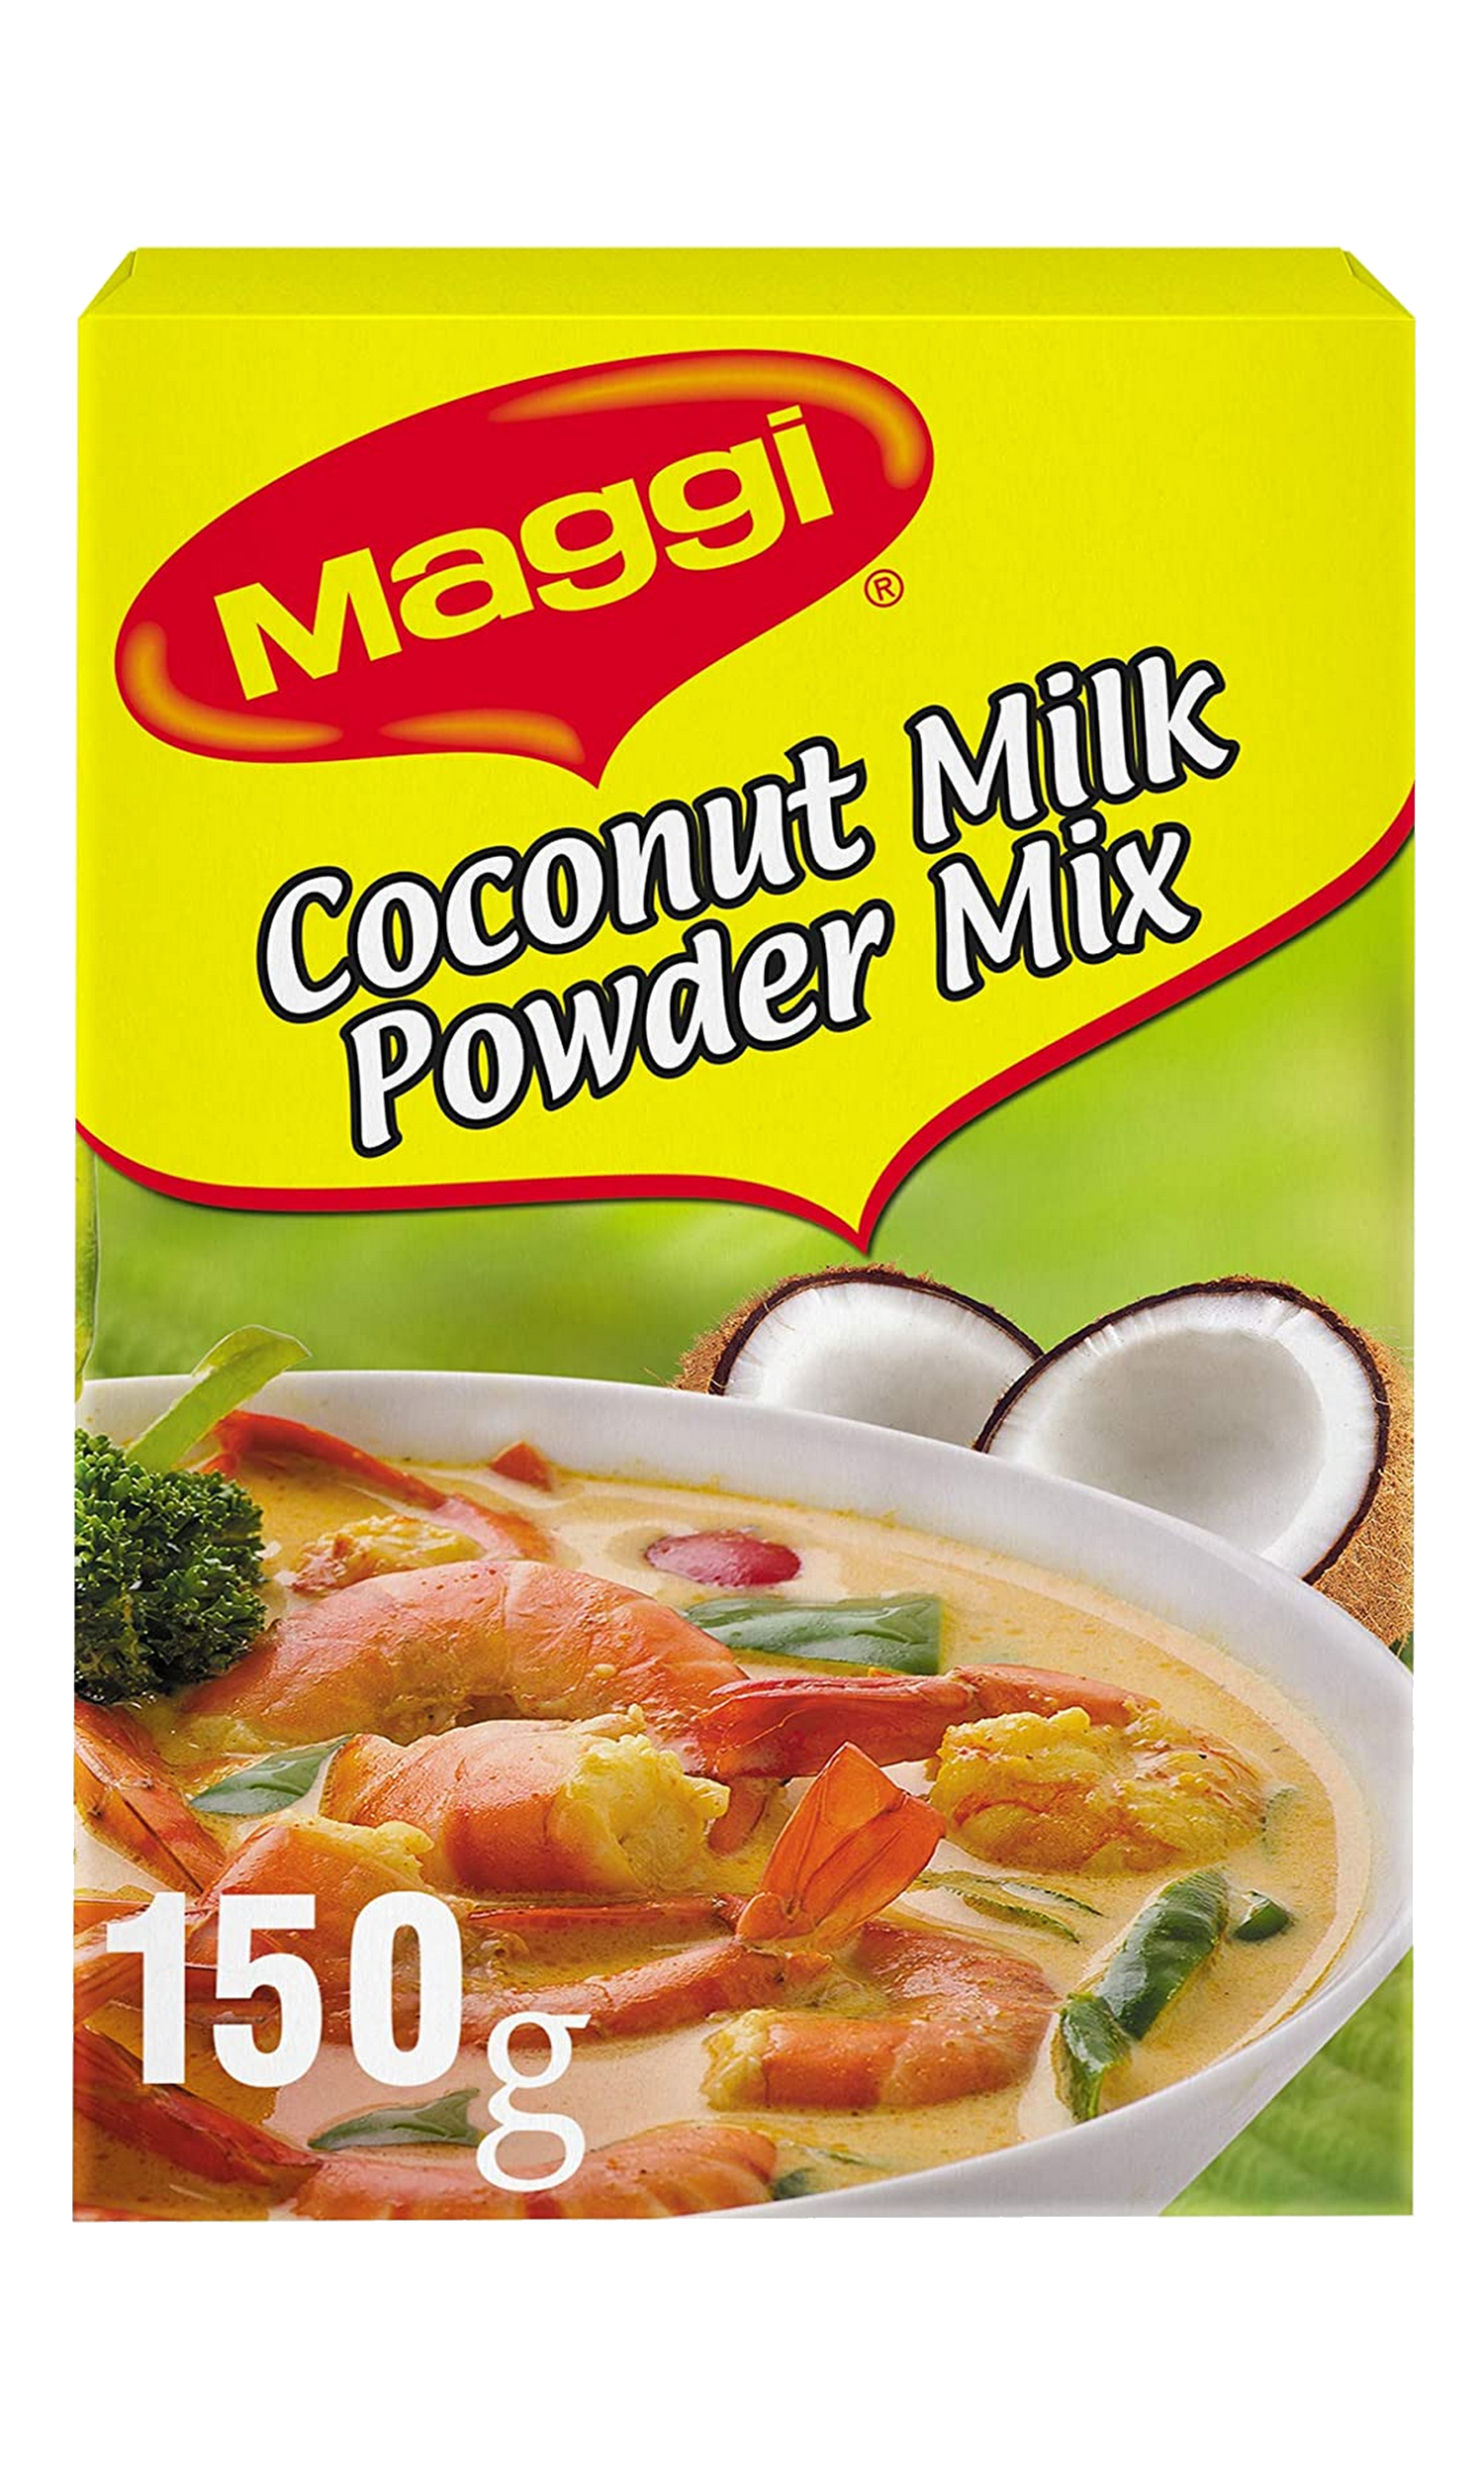 Maggi Coconut milk powder mix 150g